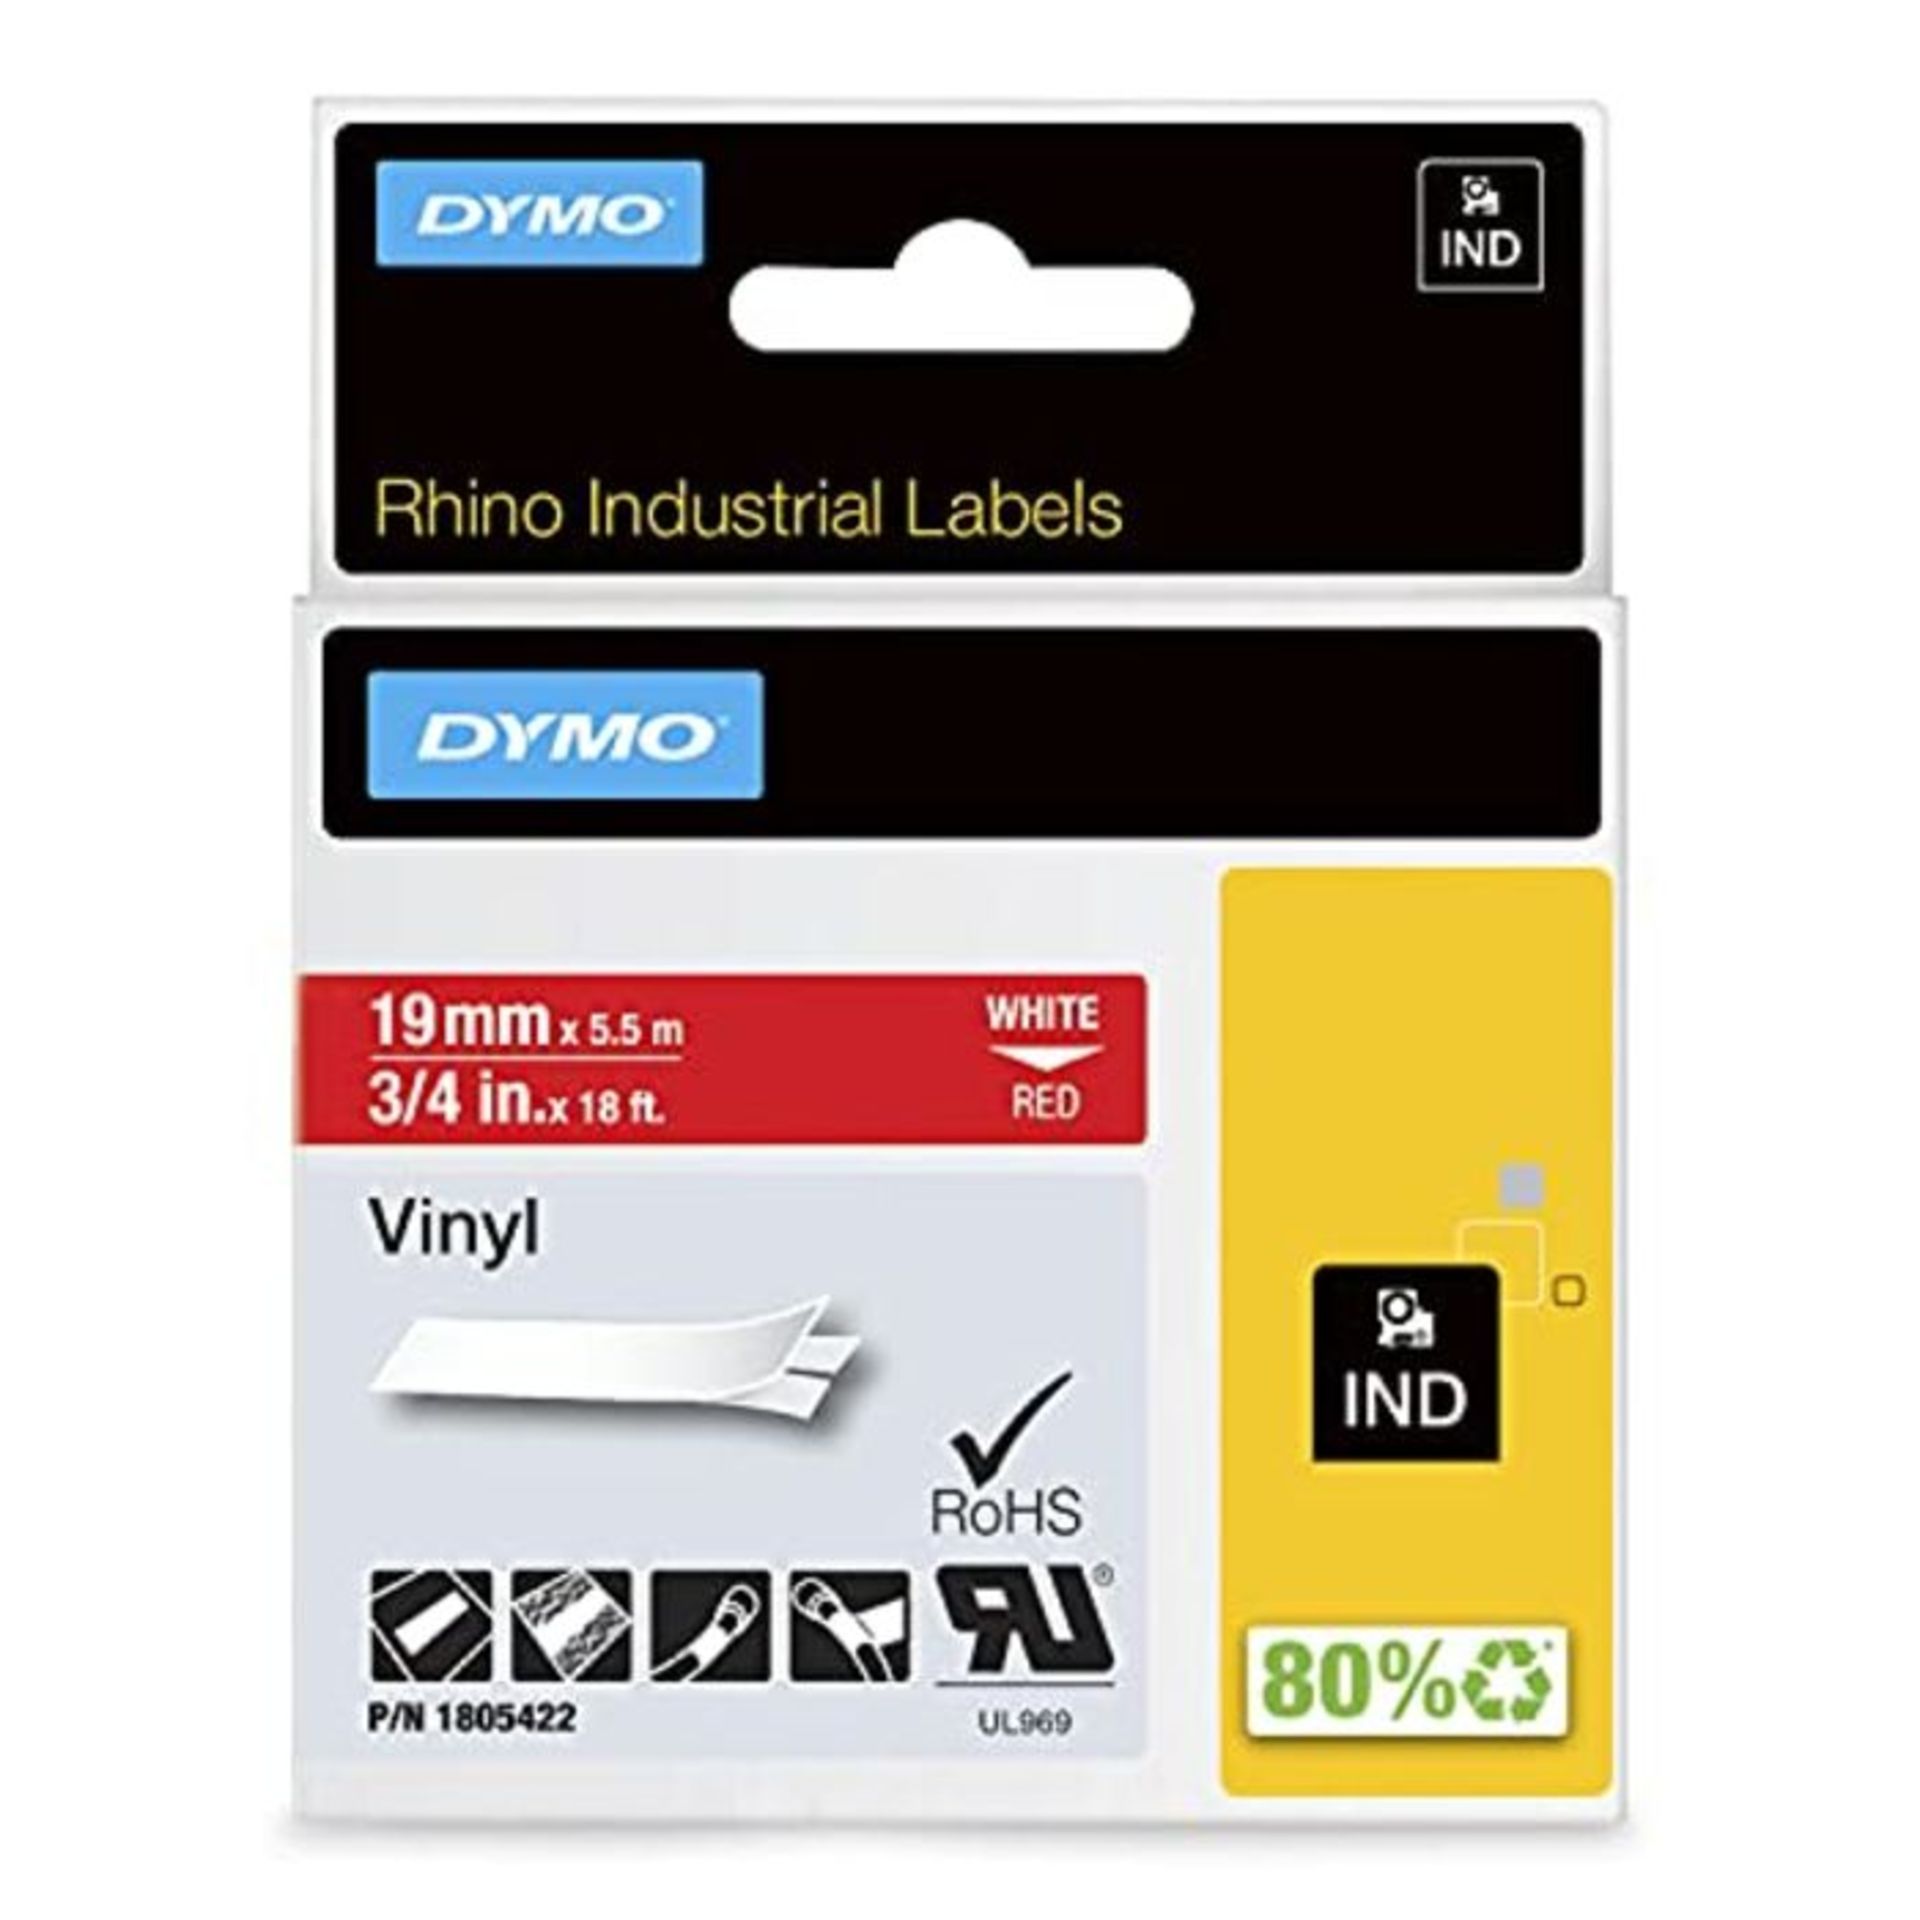 Dymo Rhino Industrial Labels Vinyl 19 mm x 5.5m - White on Red